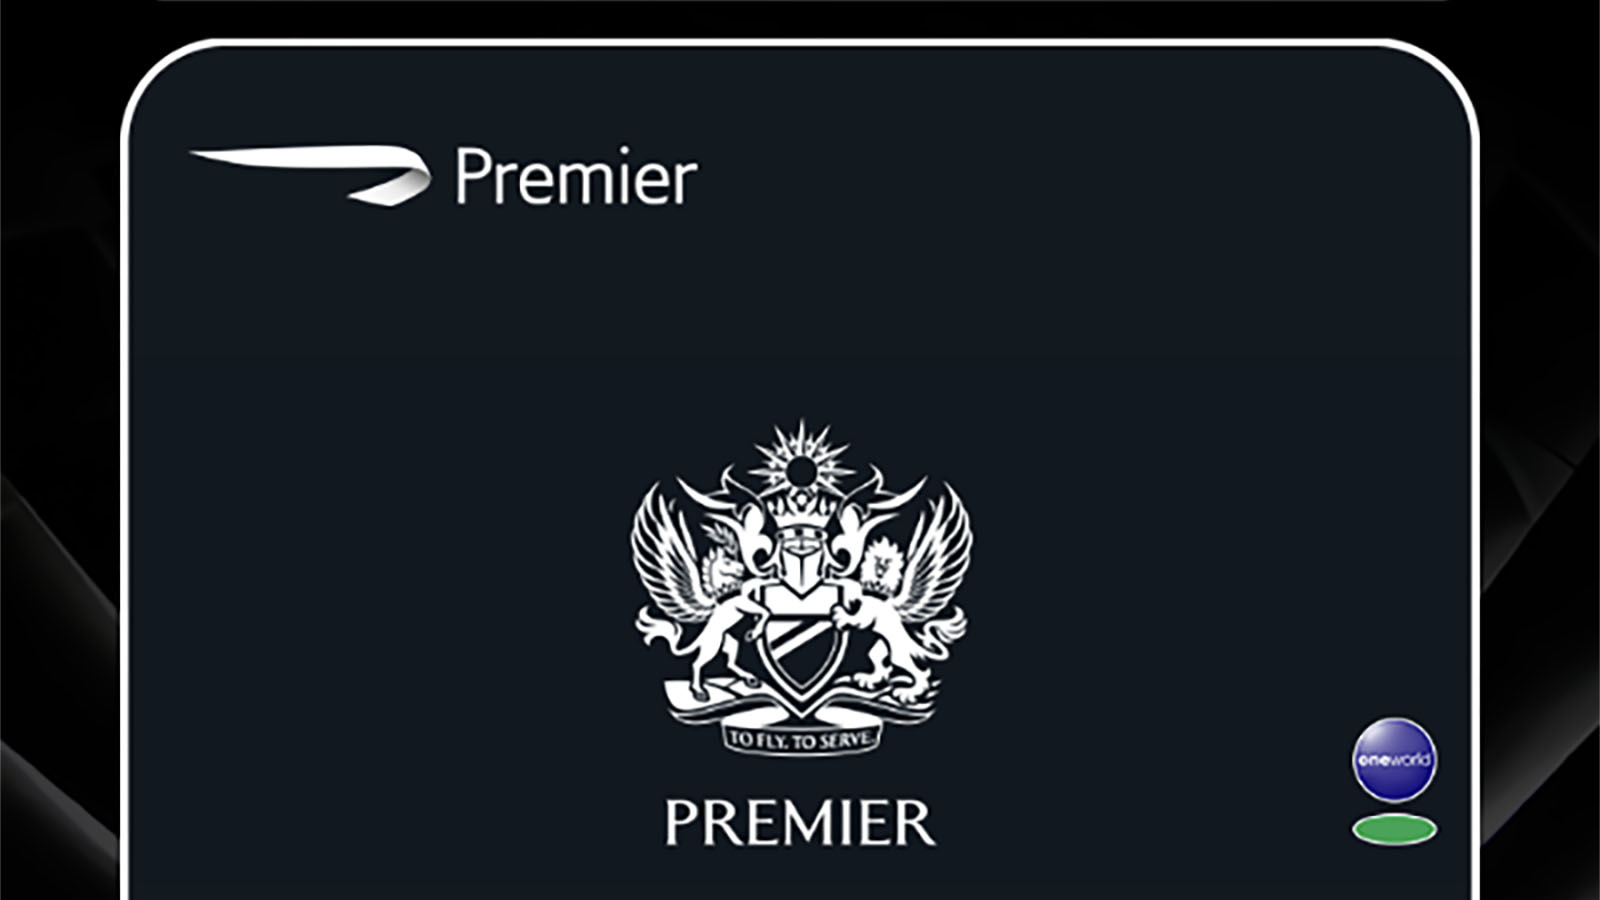 British Airways Executive Club Premier digital membership card